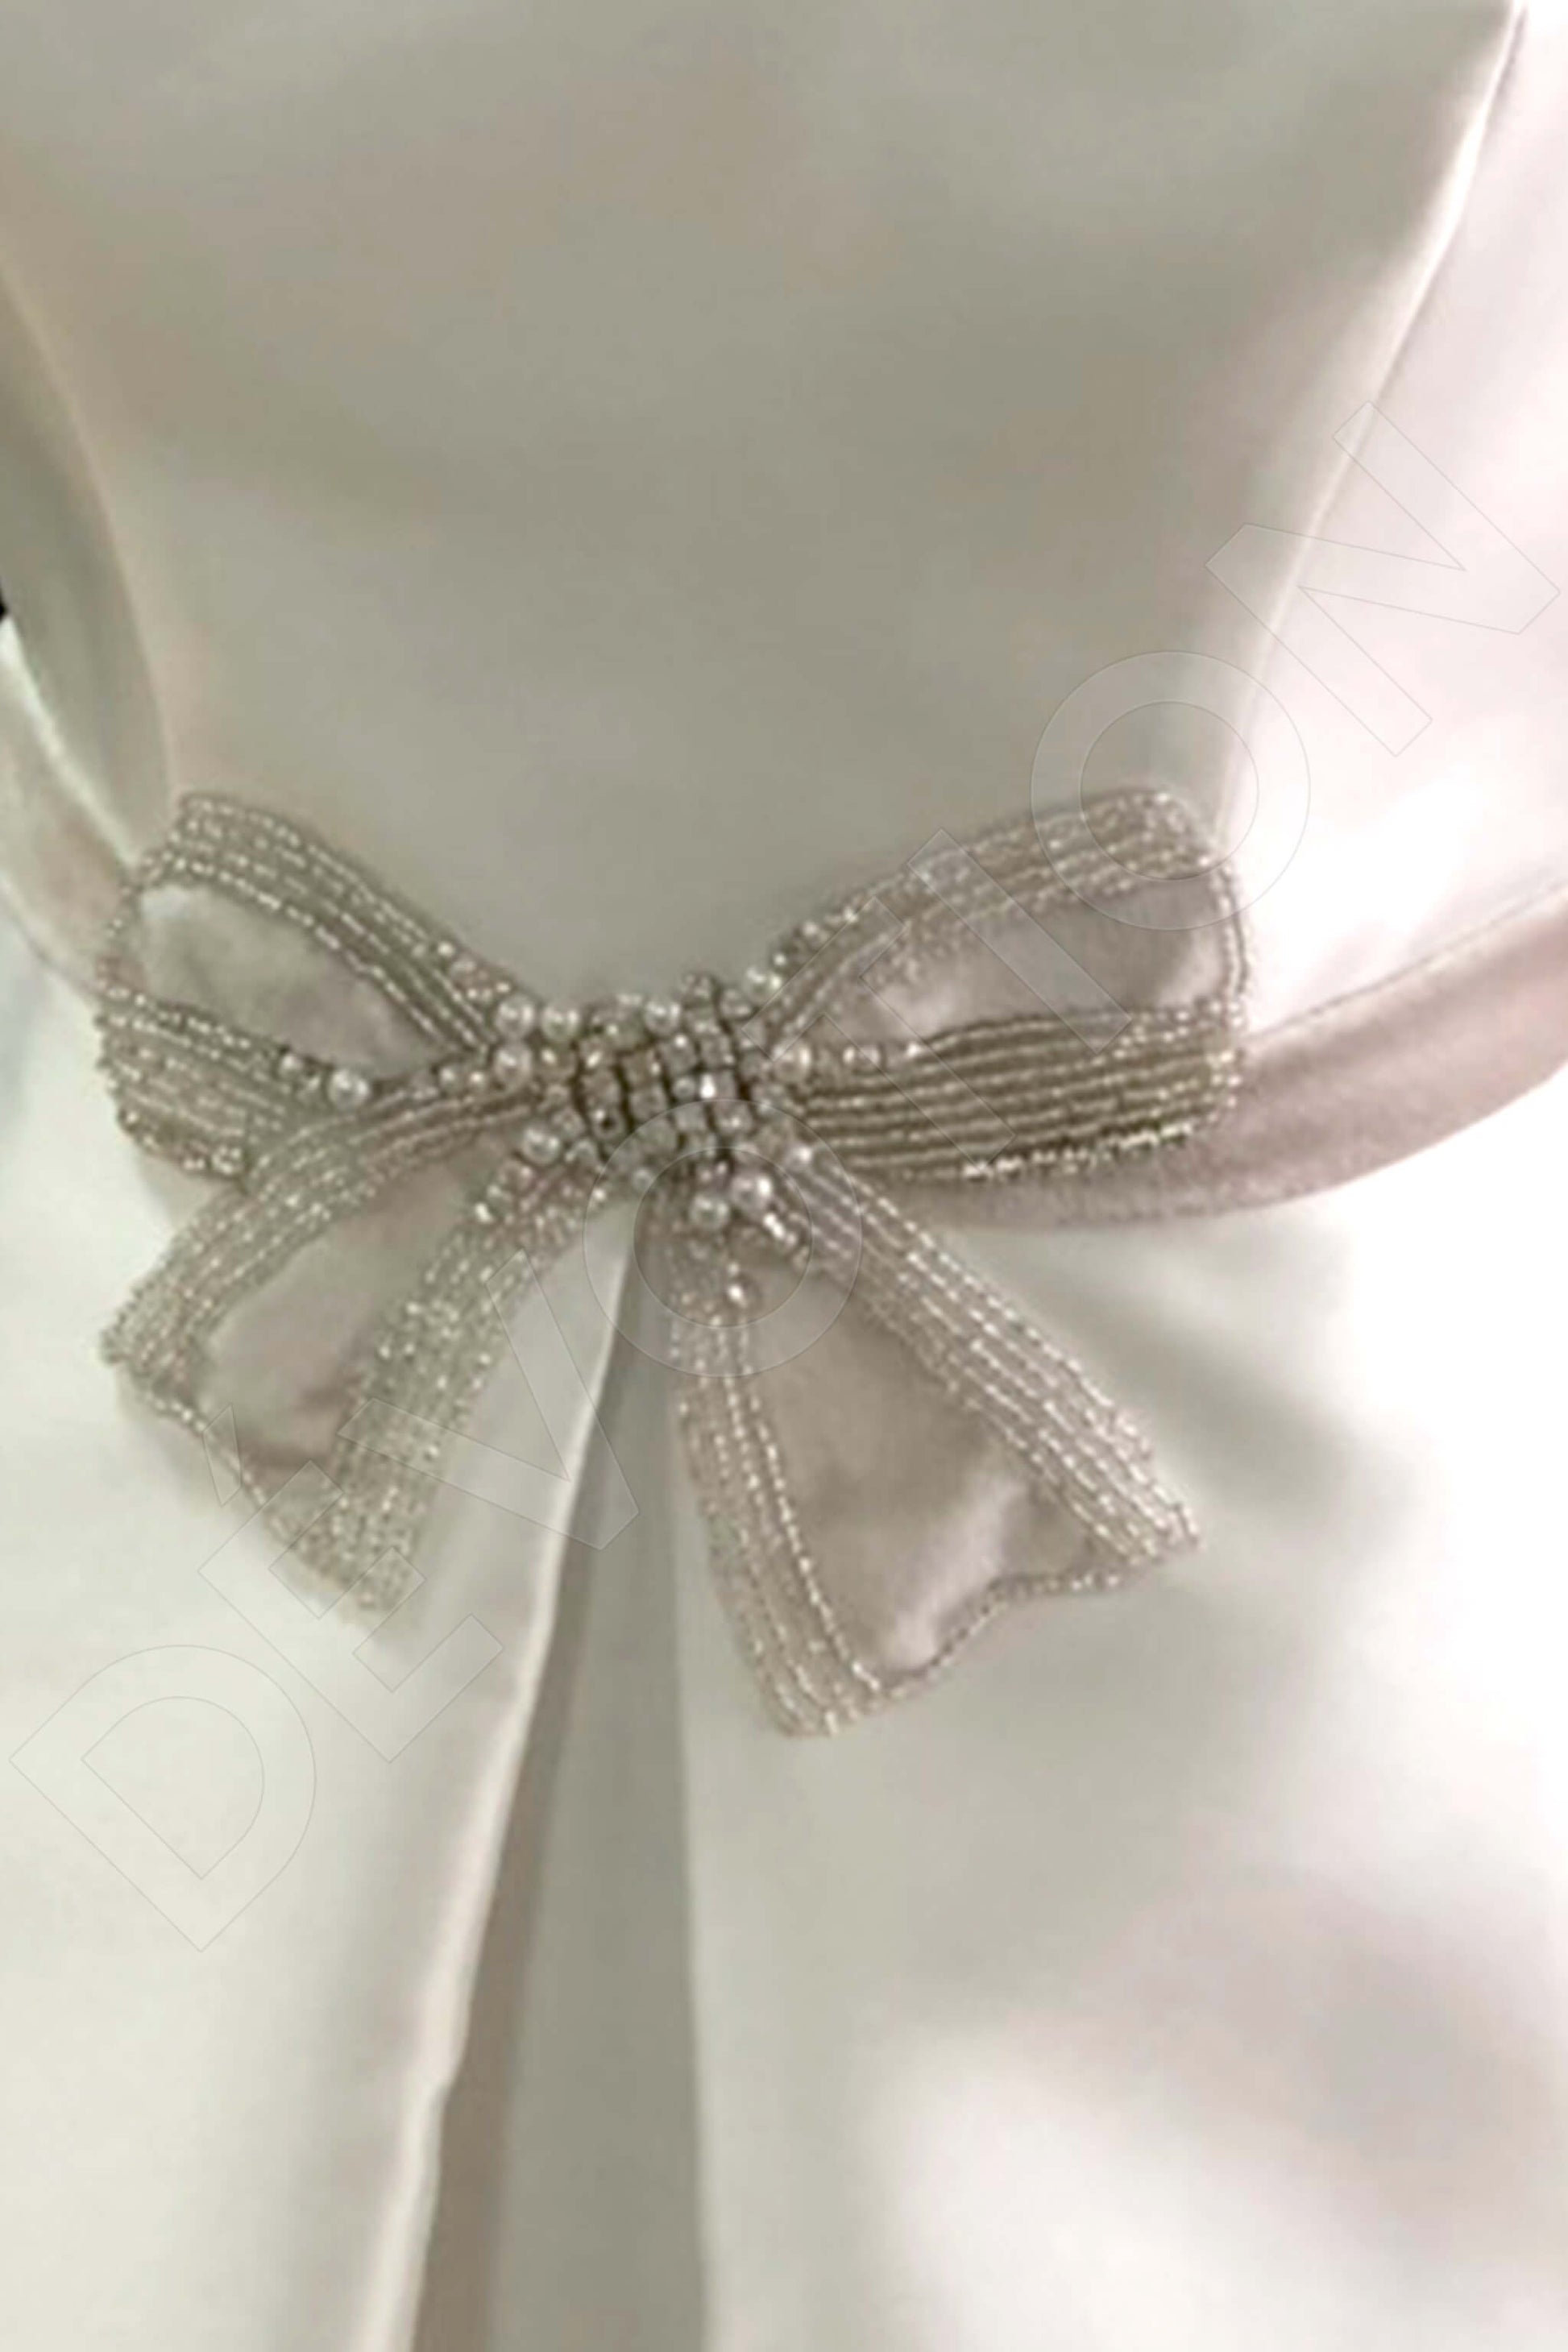 Sophily A-line Scoop Mediumivory Gray Wedding dress